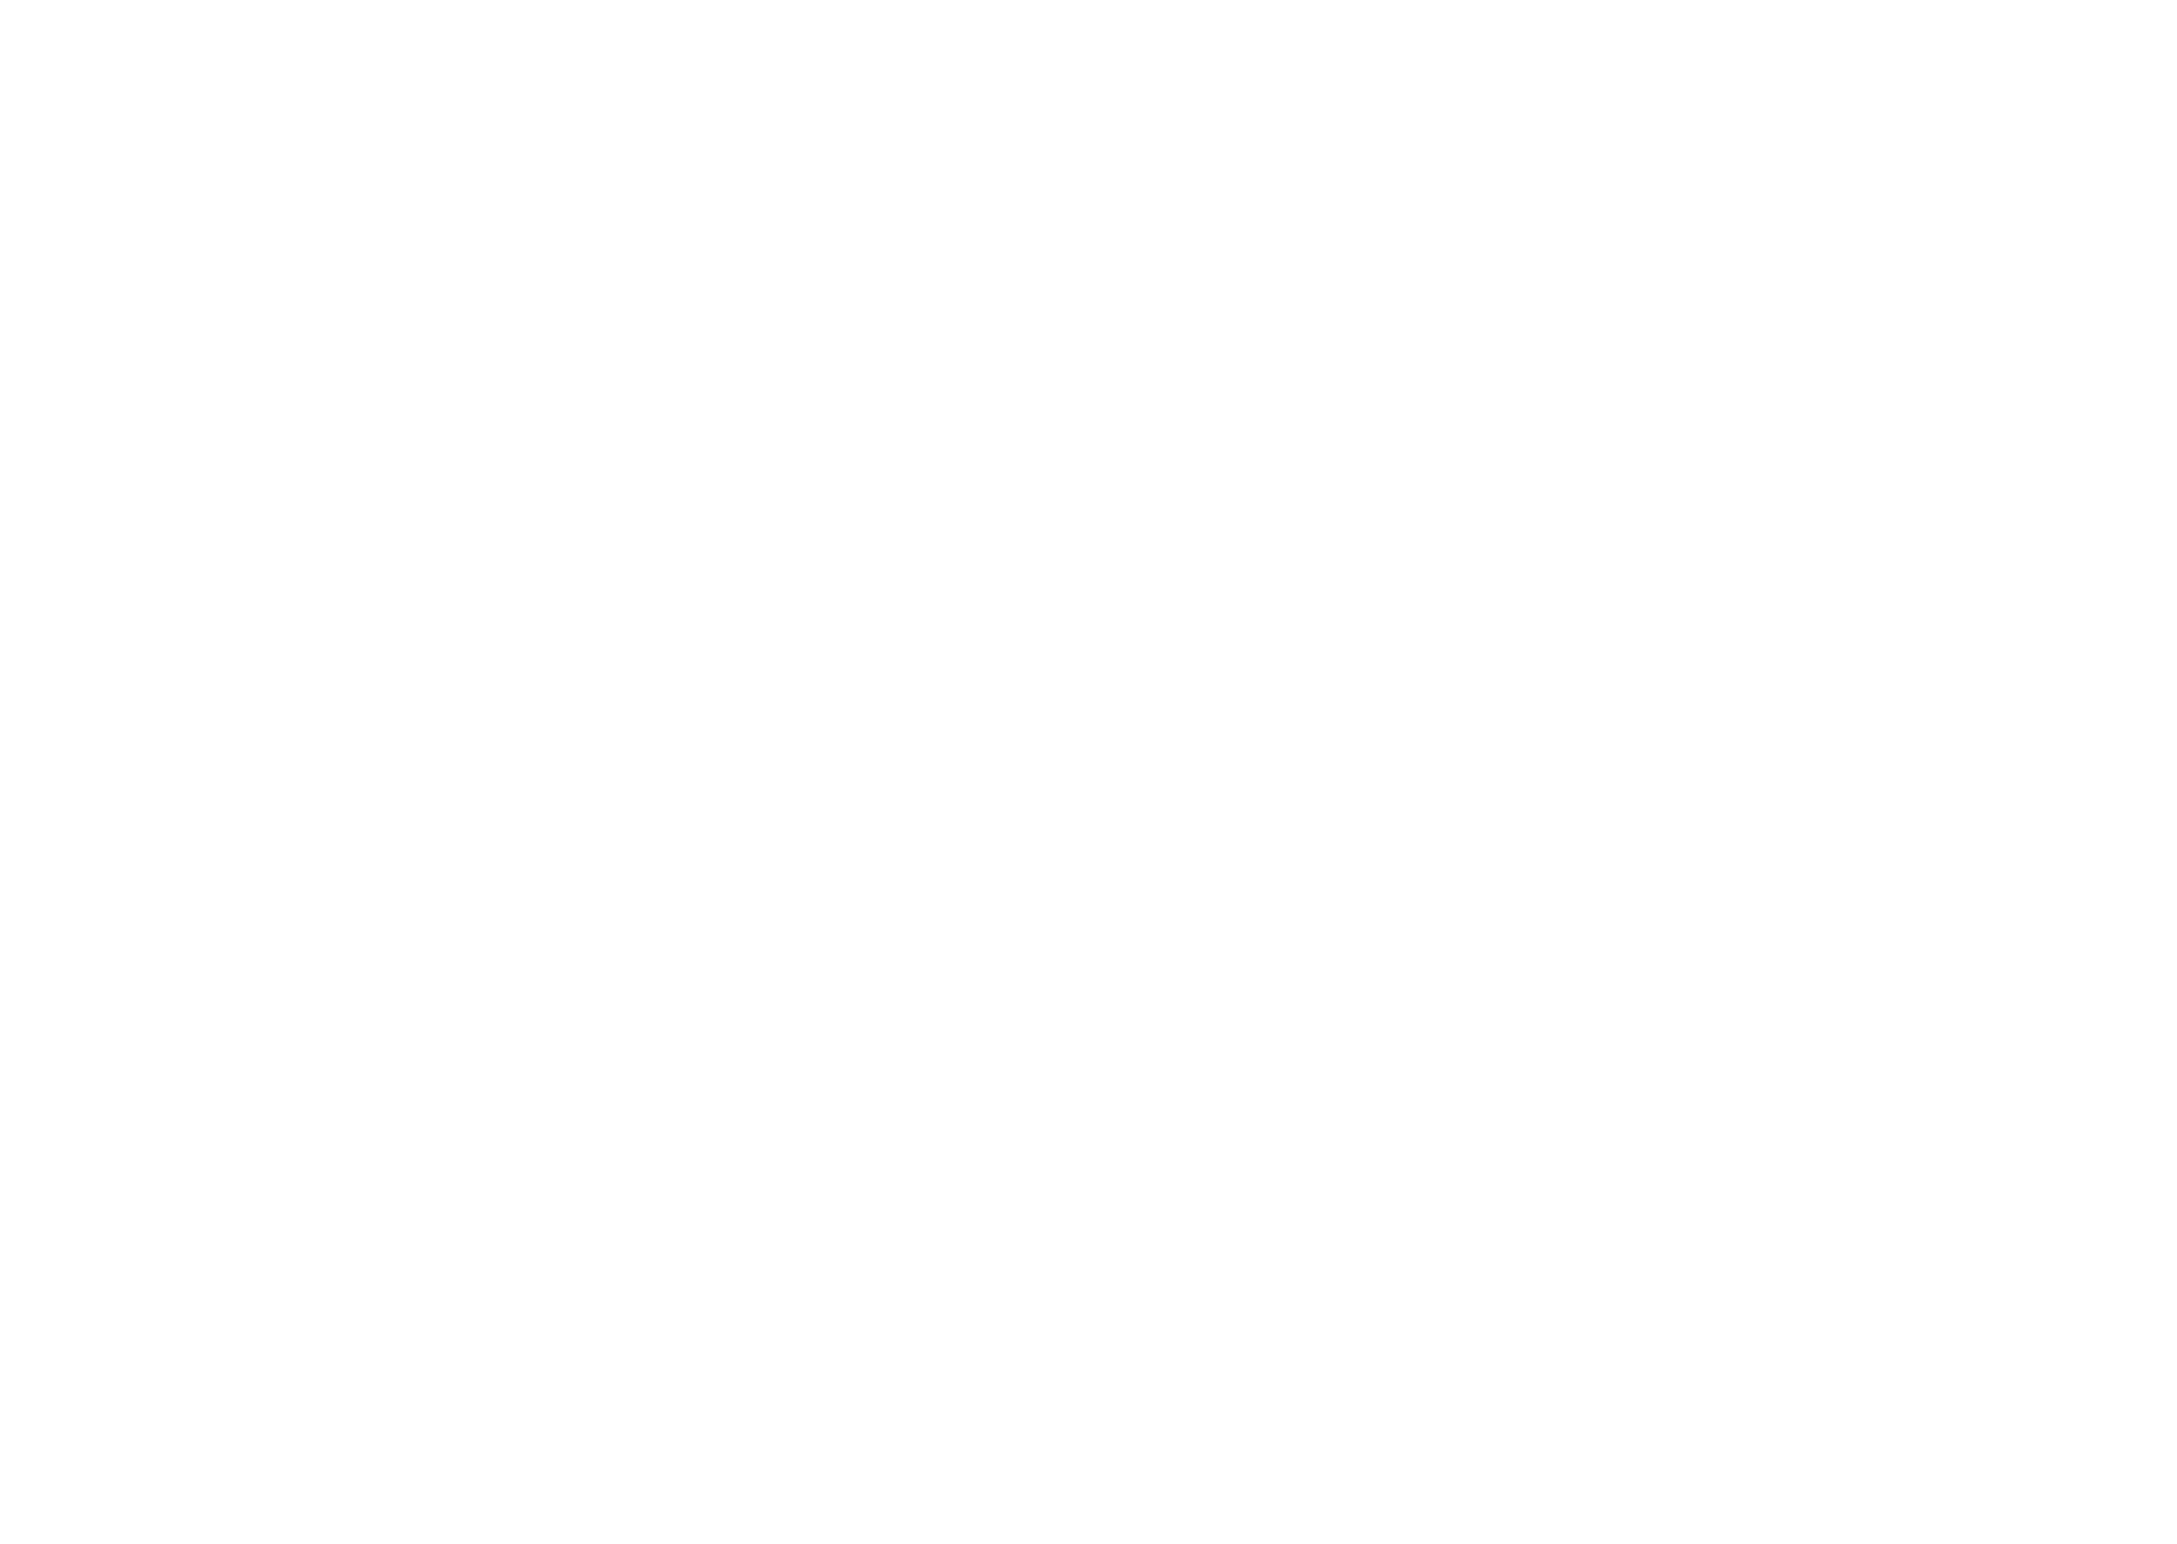 CARRIPANA FILMS